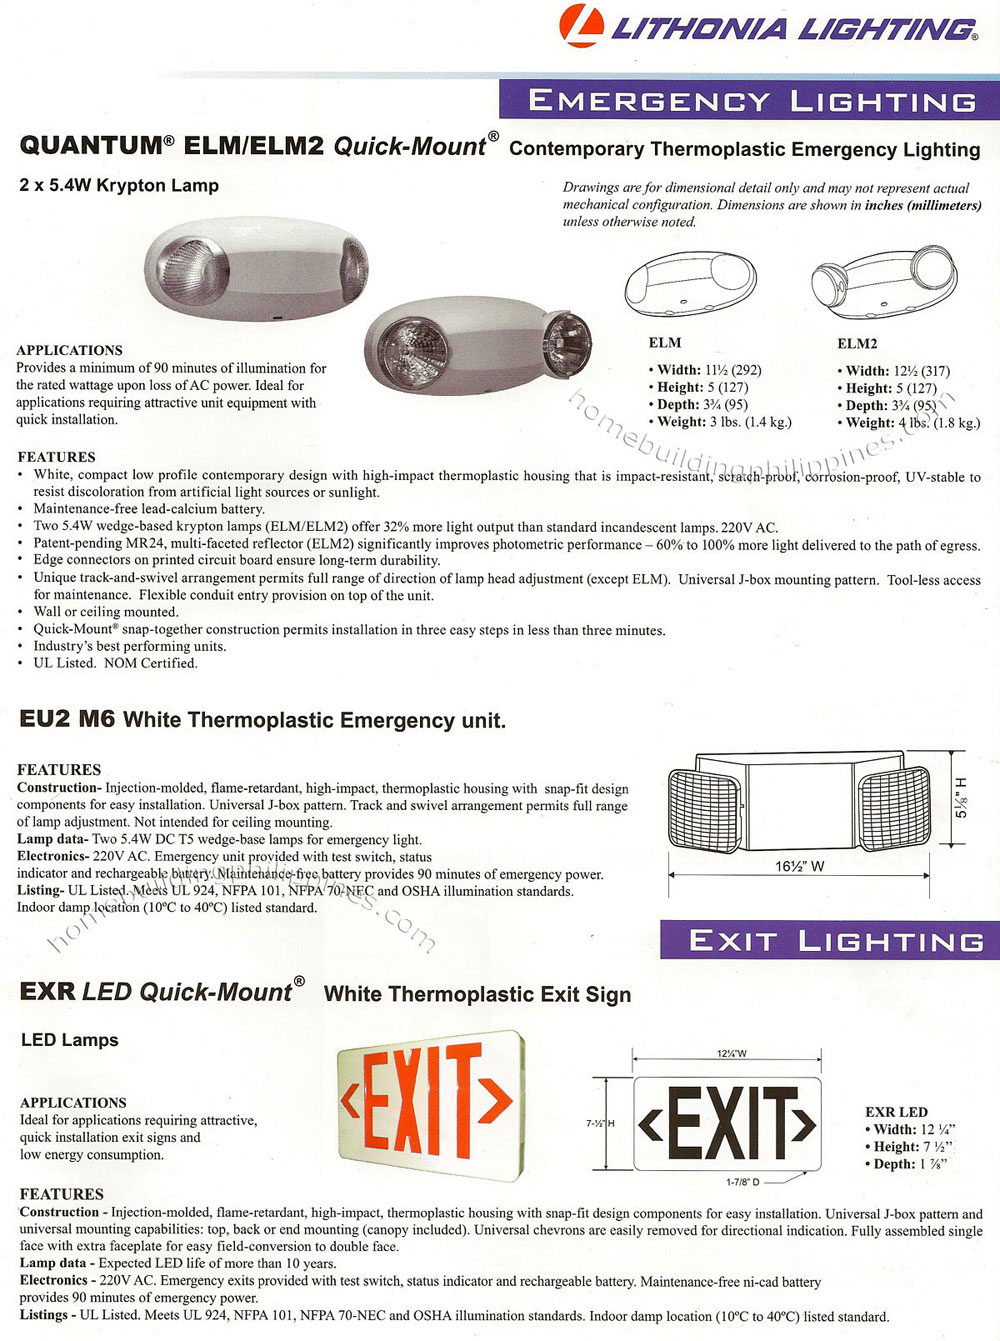 Lithonia Emergency Lighting, Exit Lighting